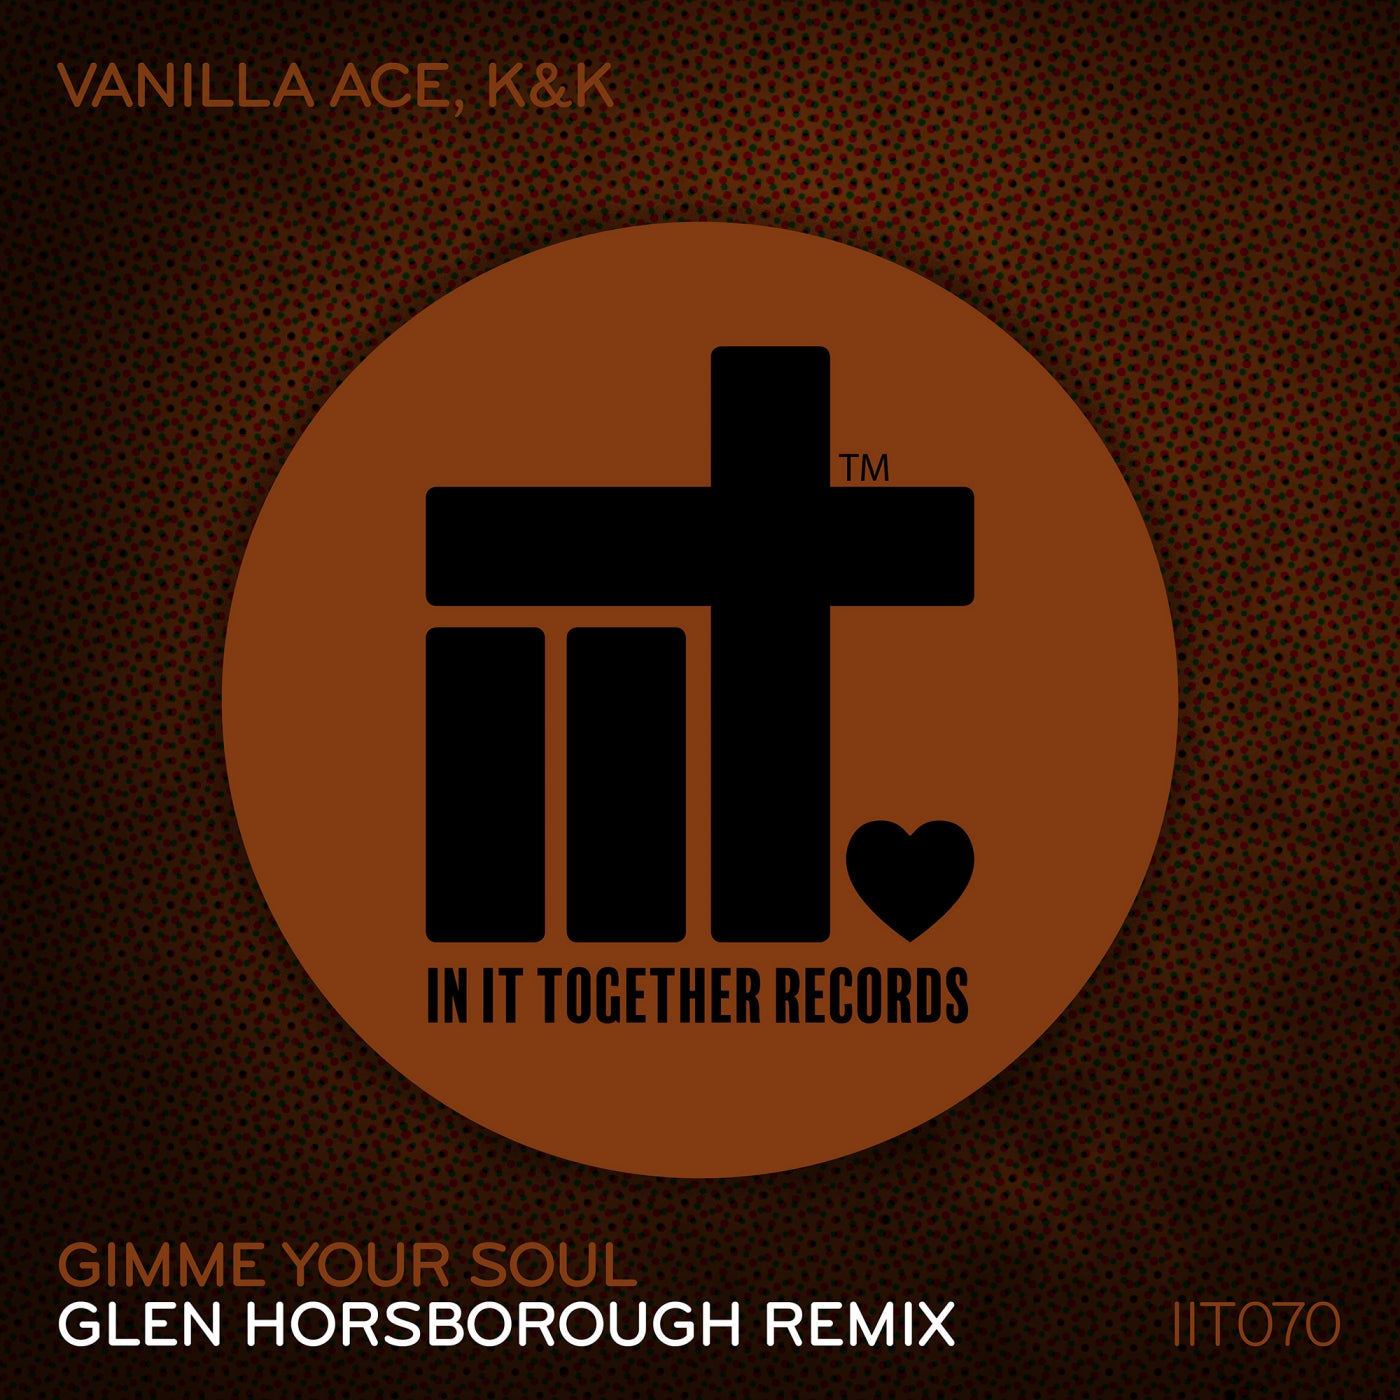 Vanilla Ace, K & K - Gimme Your Soul (Glen Horsborough Remix) [IIT070REMIX]